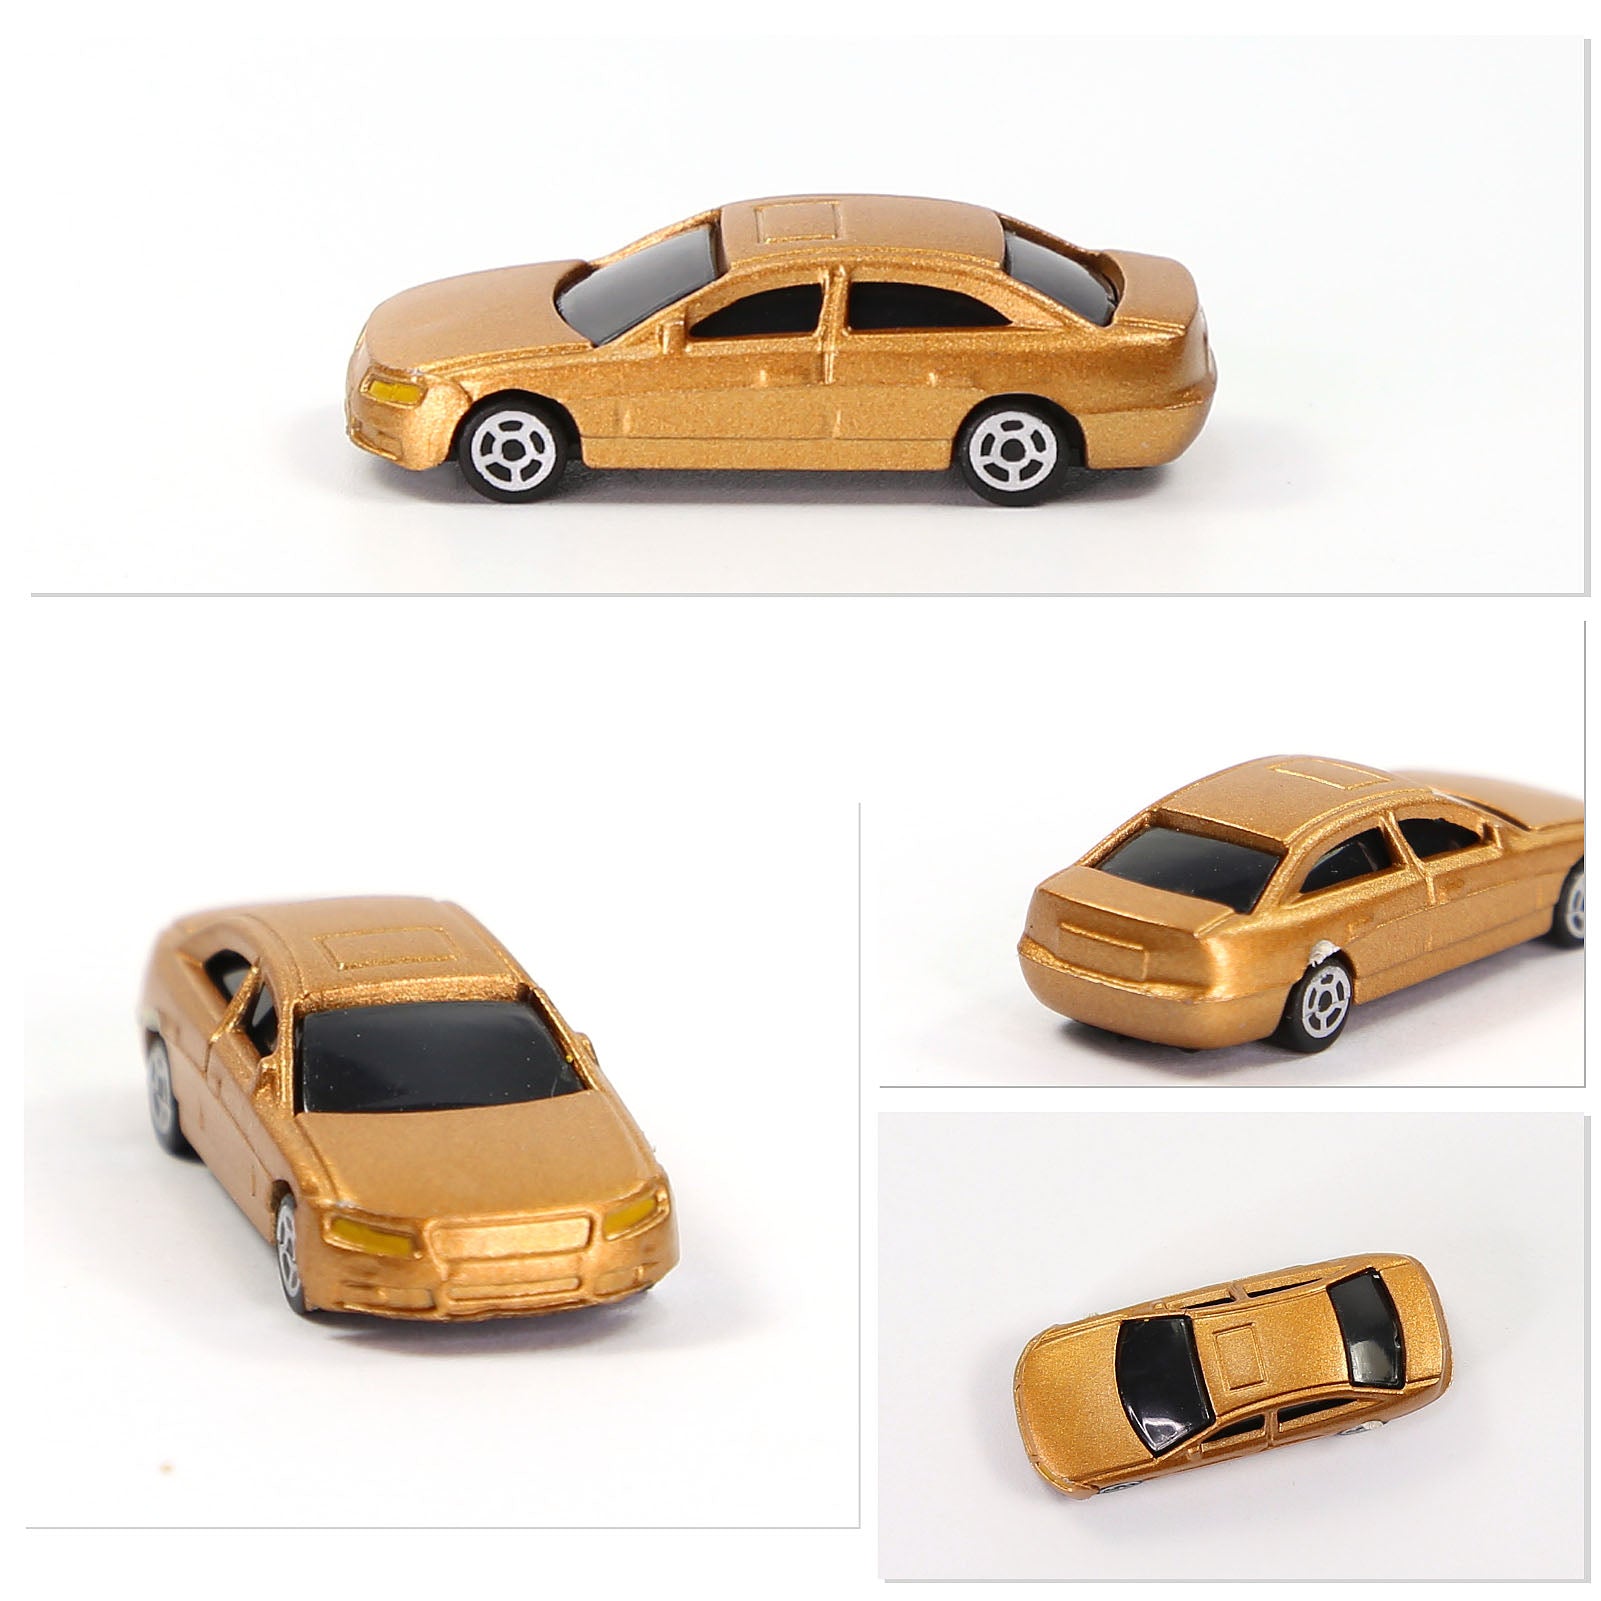 C150 100pcs N Scale 1:160  Painted Model Cars